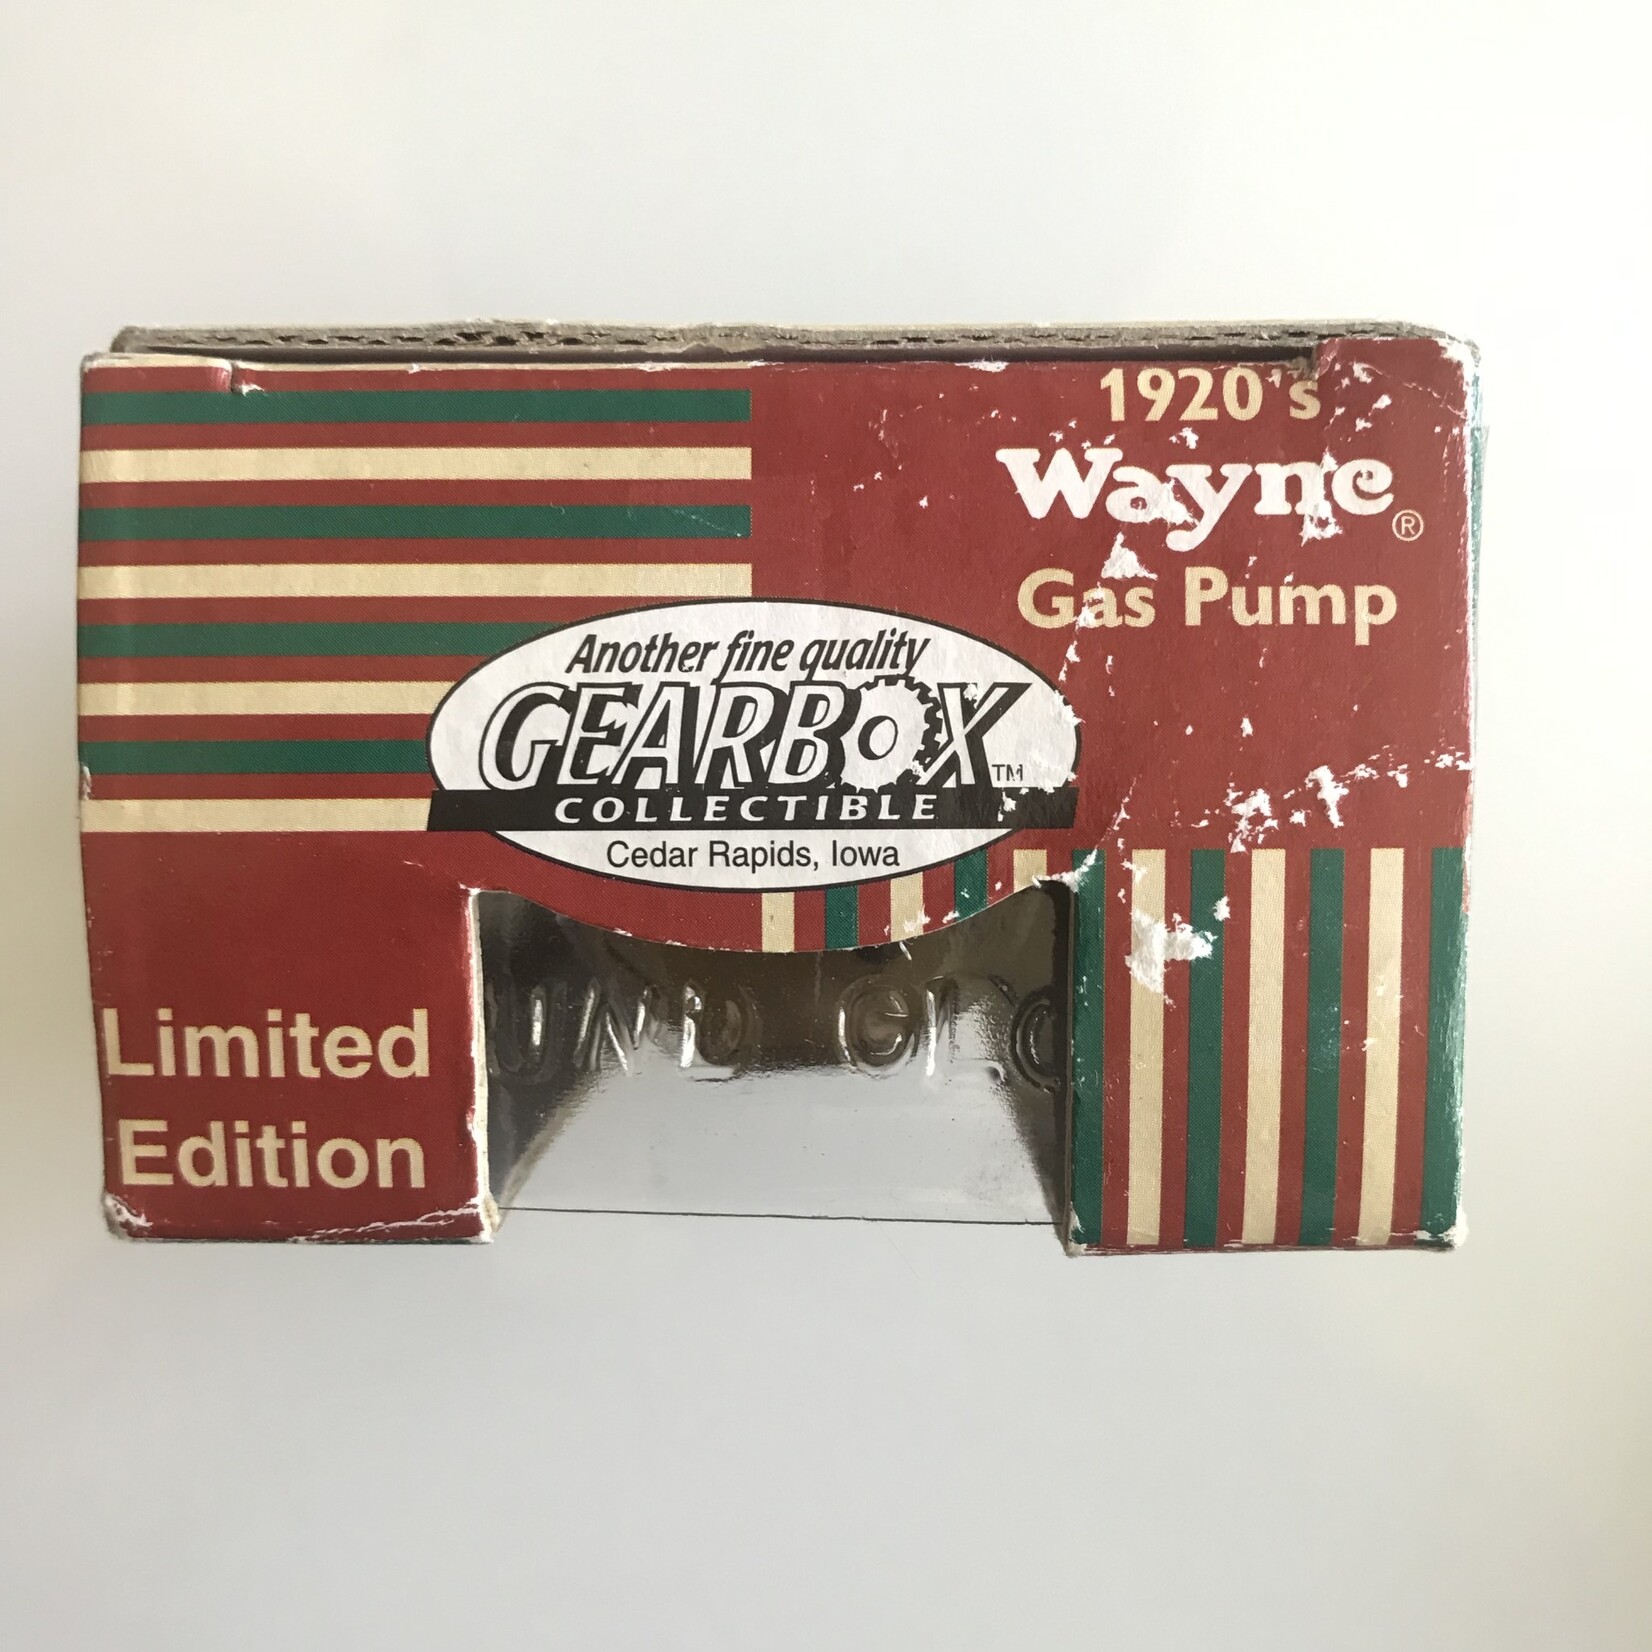 1920’s Wayne Gas Pump (Texaco) - 1:25 Scale Replica